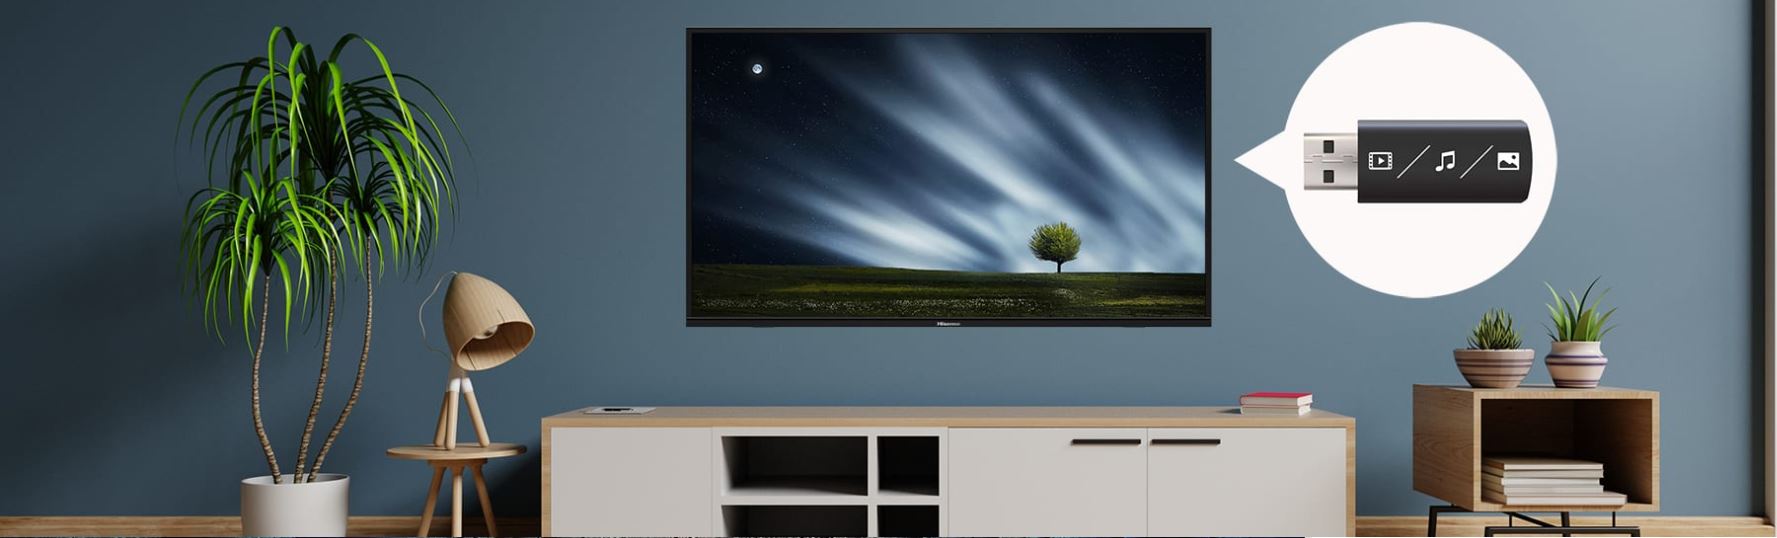 58 inch hisense smart tv